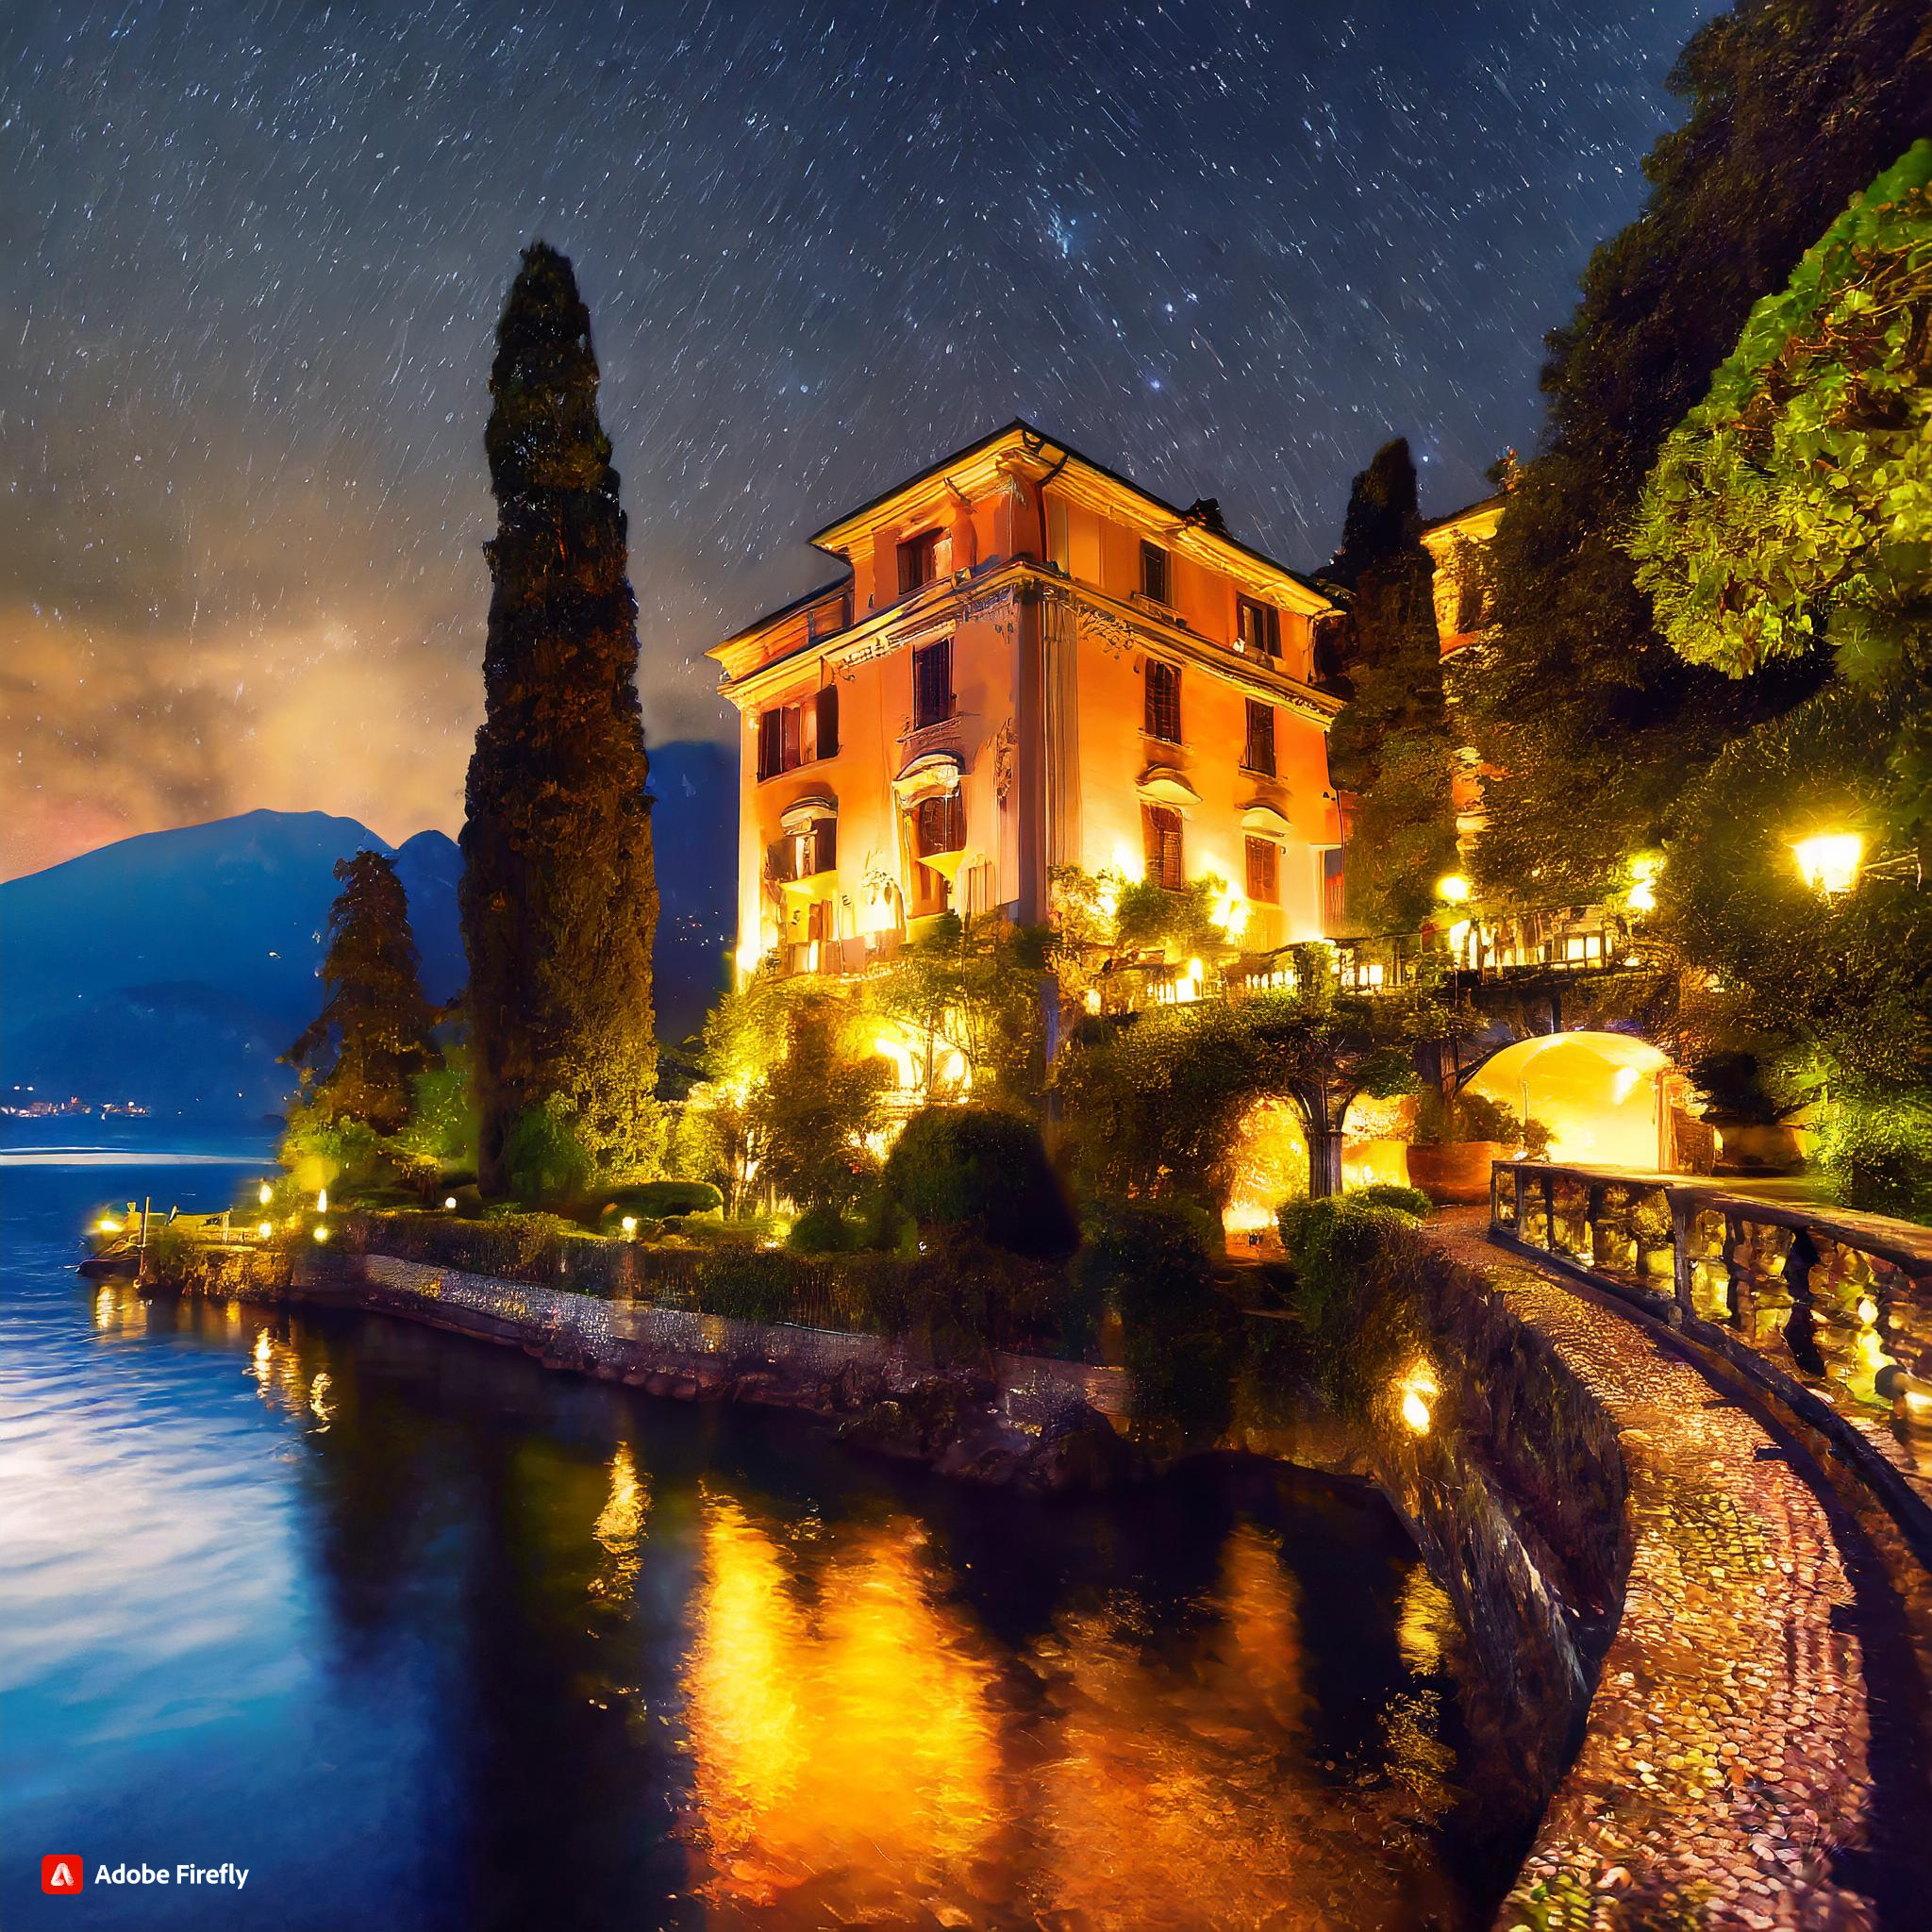 Firefly Villa del Balbianello, Lake Como, Italy, cool summer night, lights, night sky.